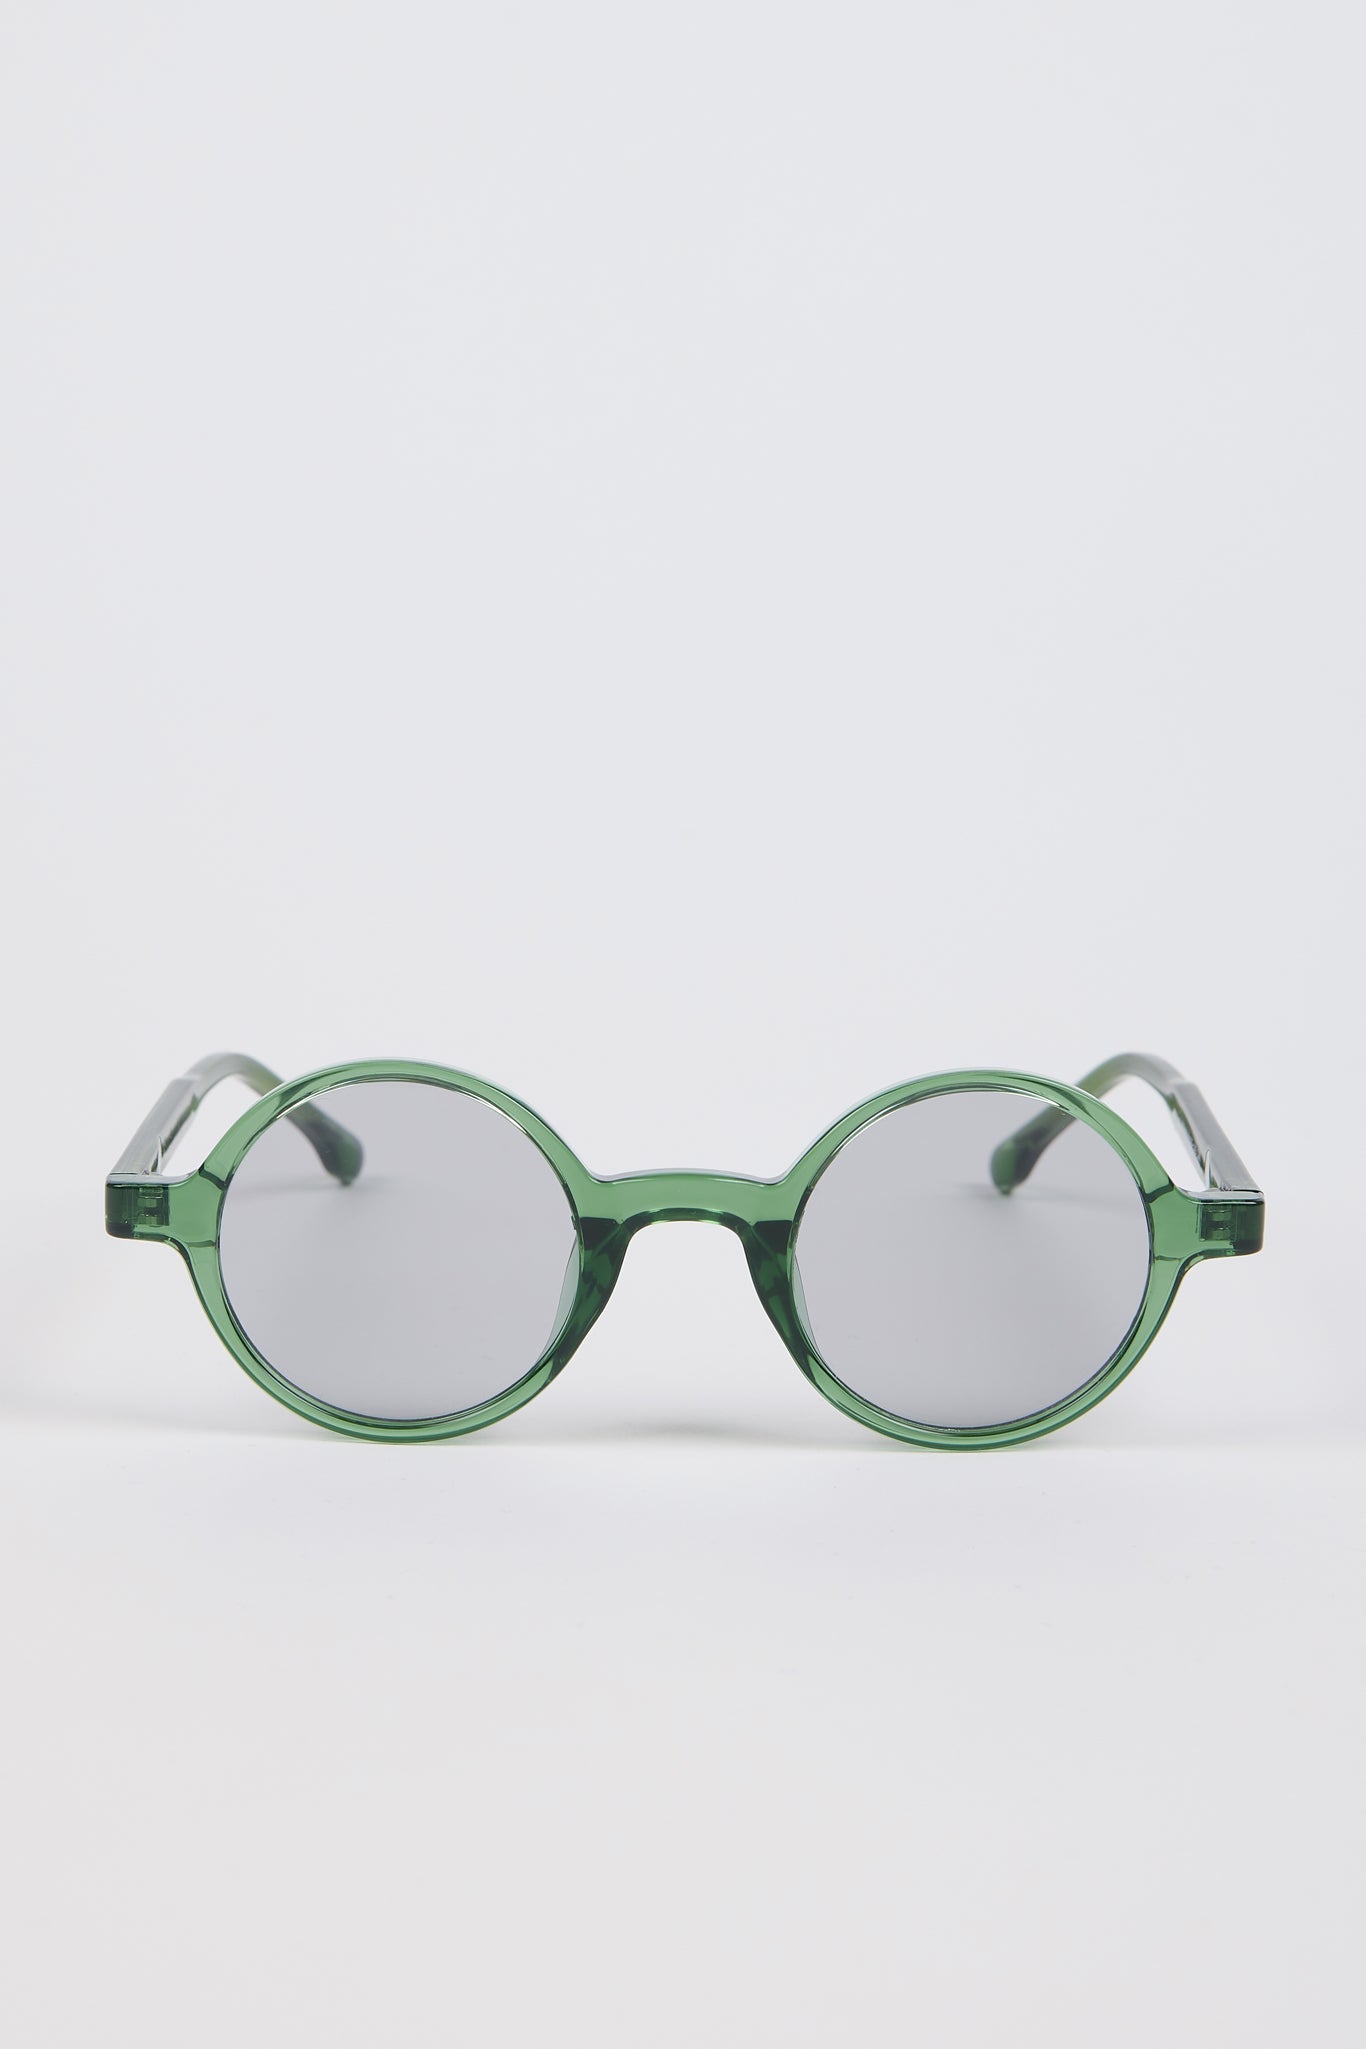 Green perfect circle sunglasses_1